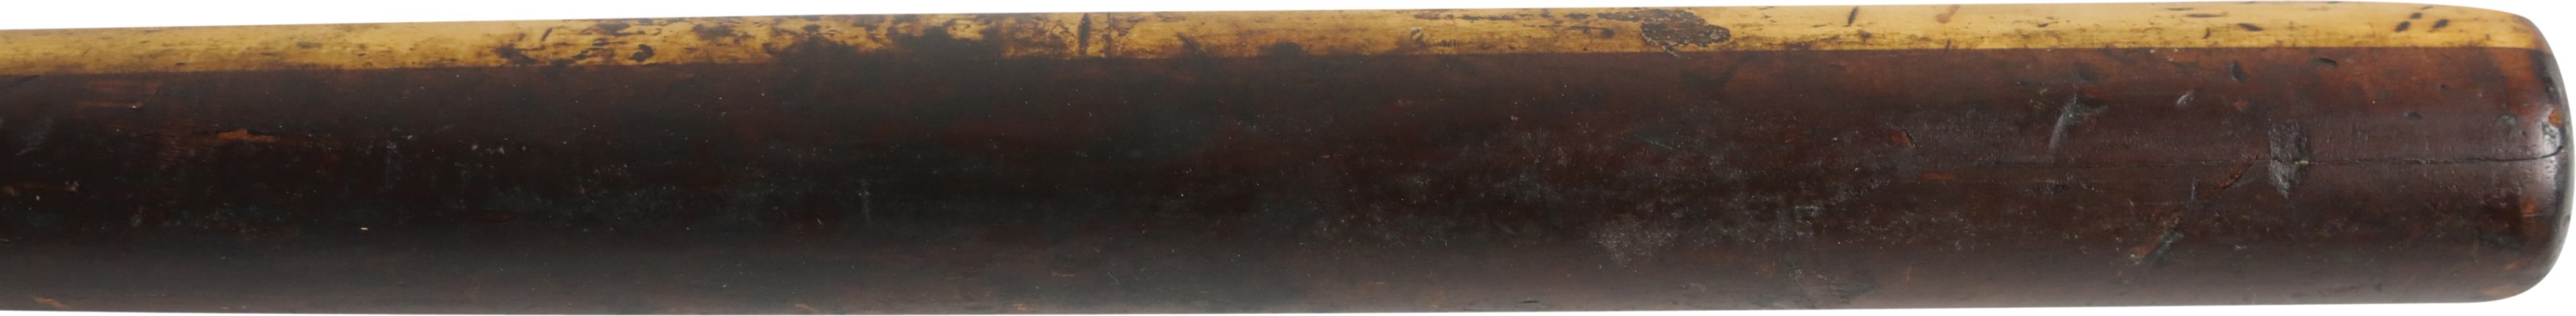 Baseball Memorabilia - 1870s Baseball Bat w/Maple Inlays